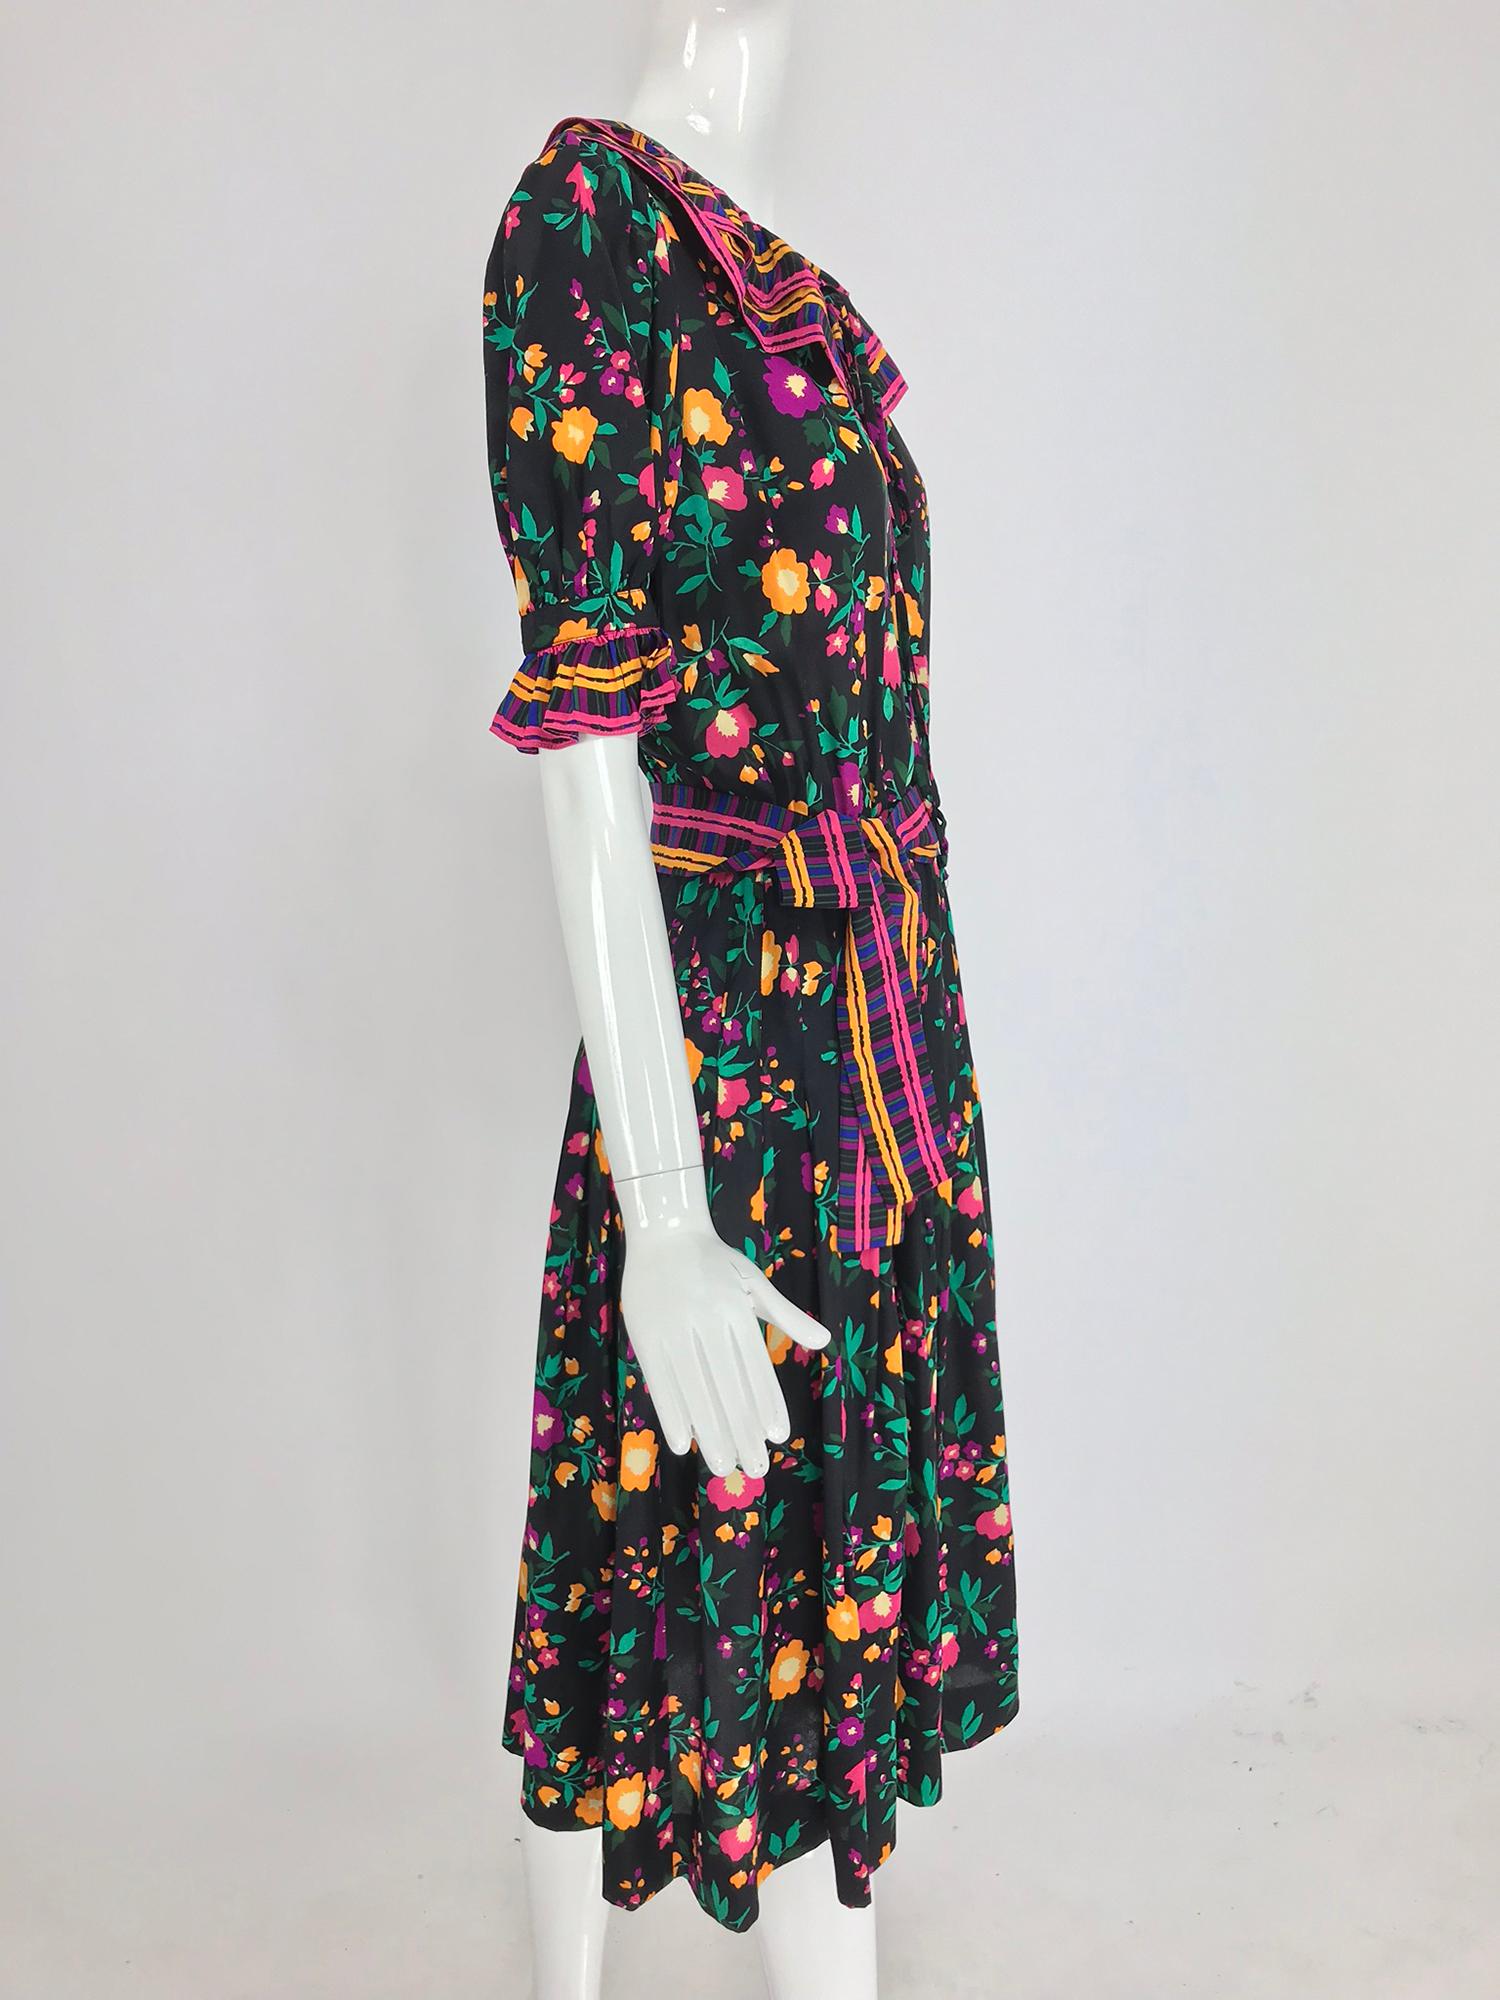 Yves Saint Laurent Rive Gauche floral silk mix print dress 1970s 5